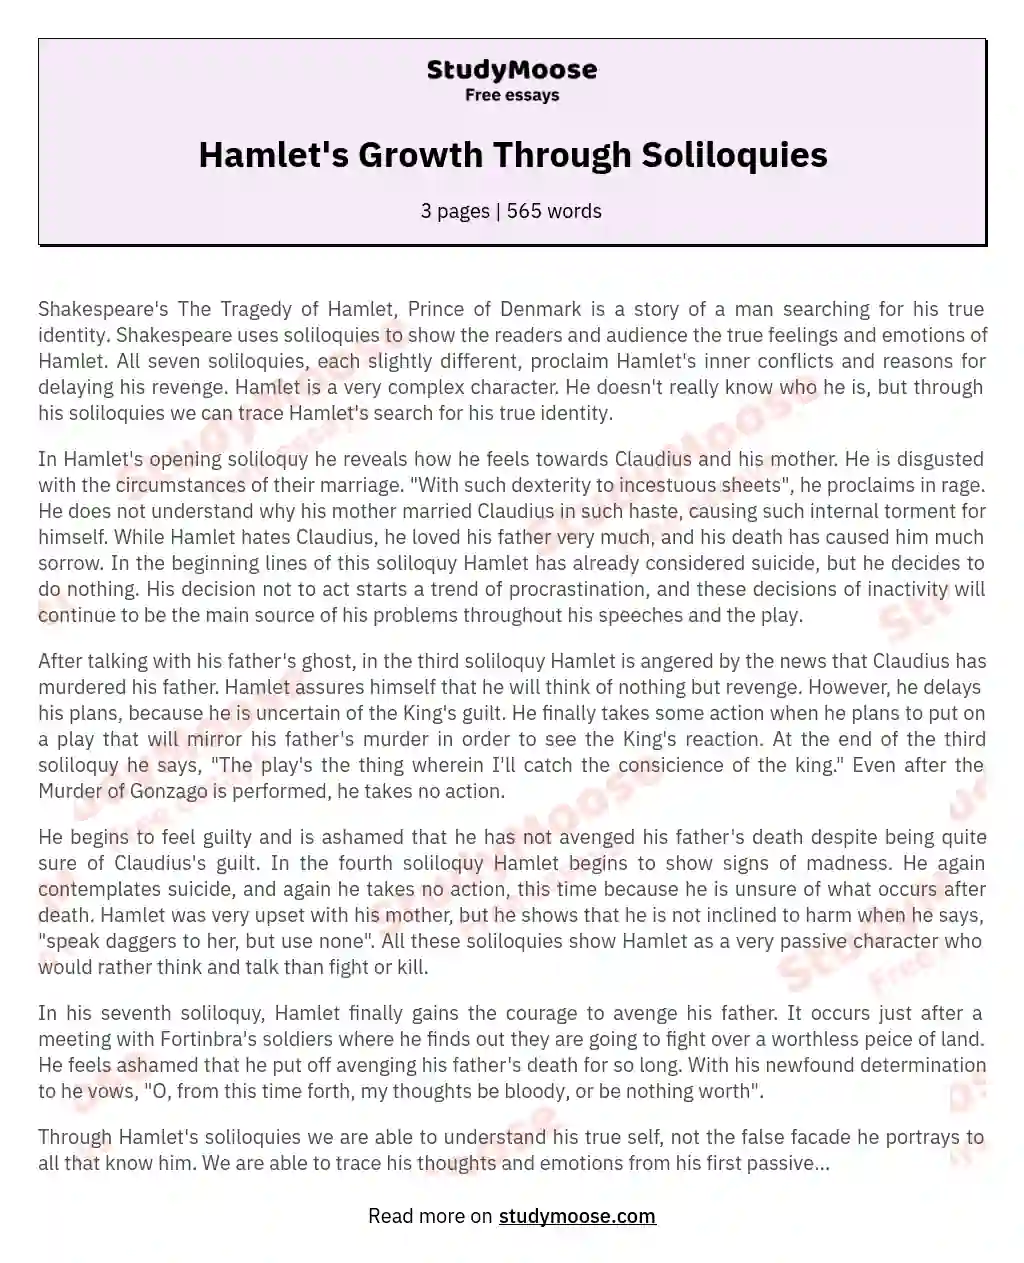 Hamlet's Growth Through Soliloquies